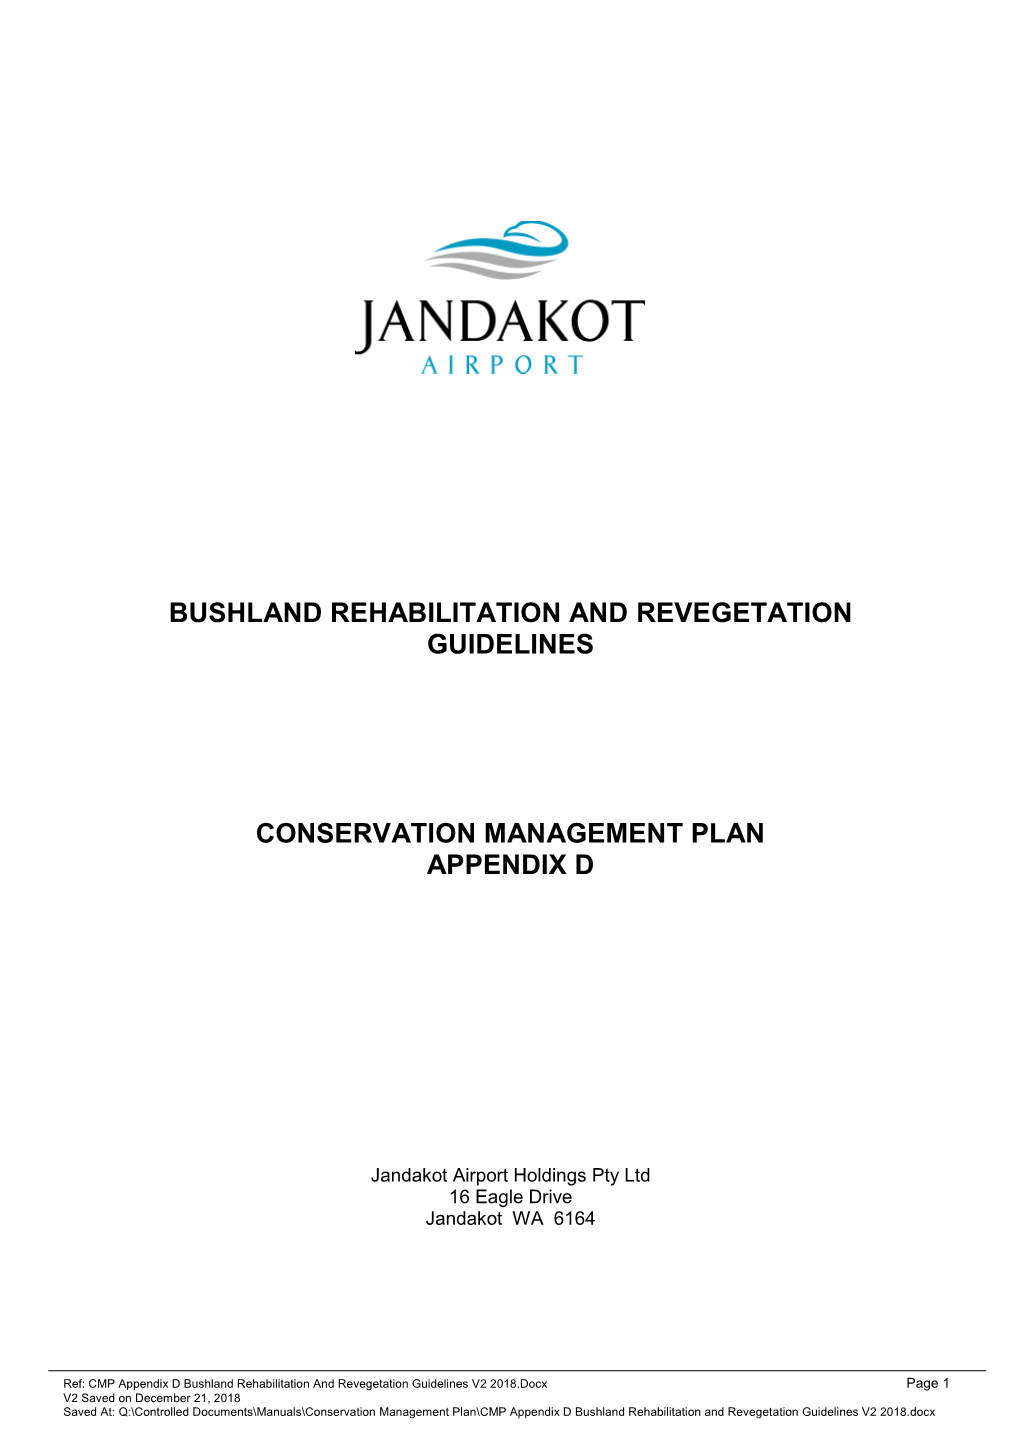 Appendix D: Bushland Rehabilitation and Revegetation Guidelines